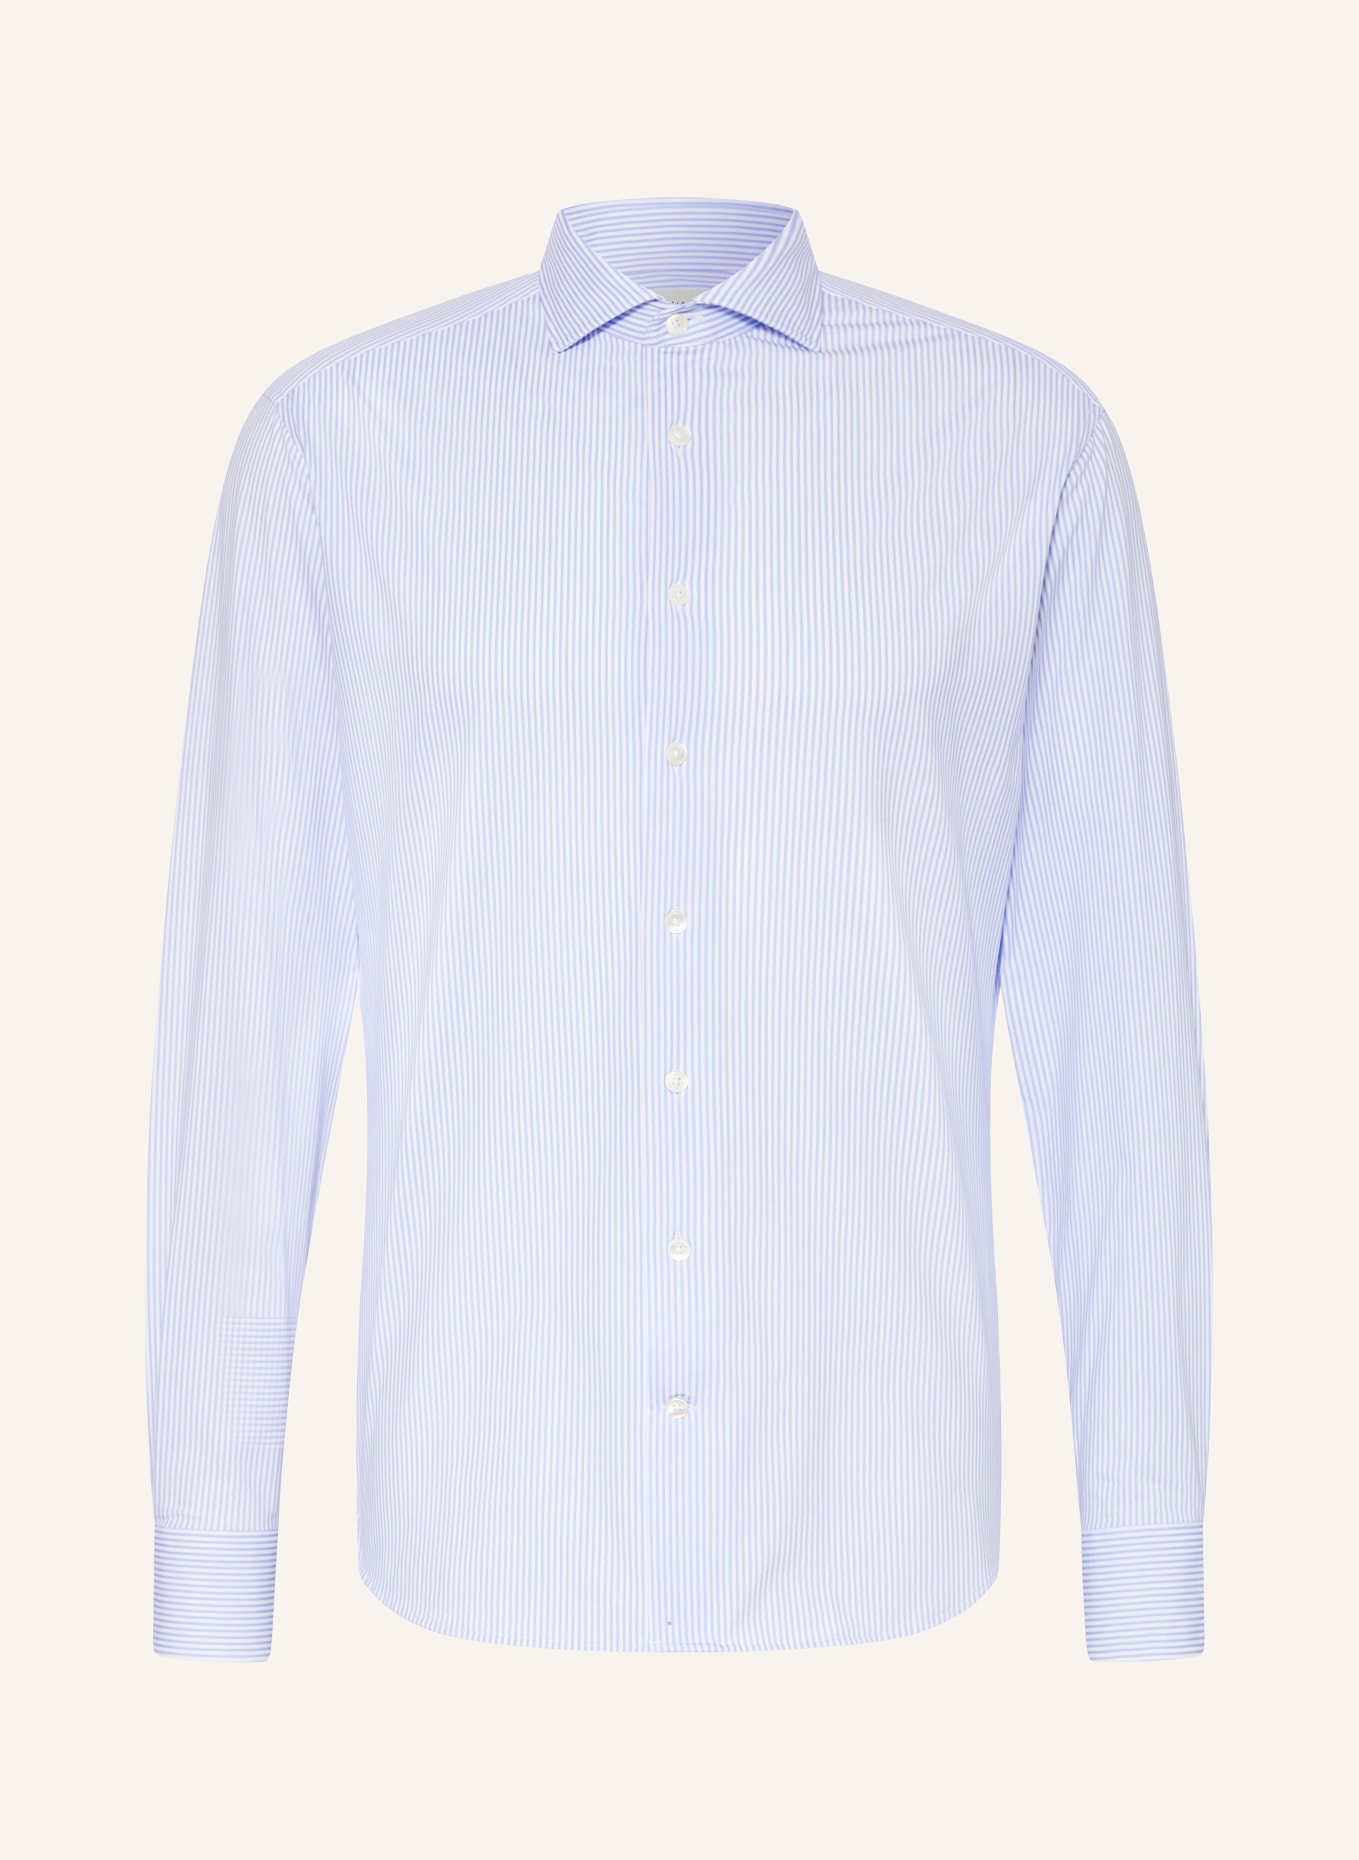 TRAIANO Jerseyhemd ROSSINI Radical Fit, Farbe: WEISS/ HELLBLAU (Bild 1)